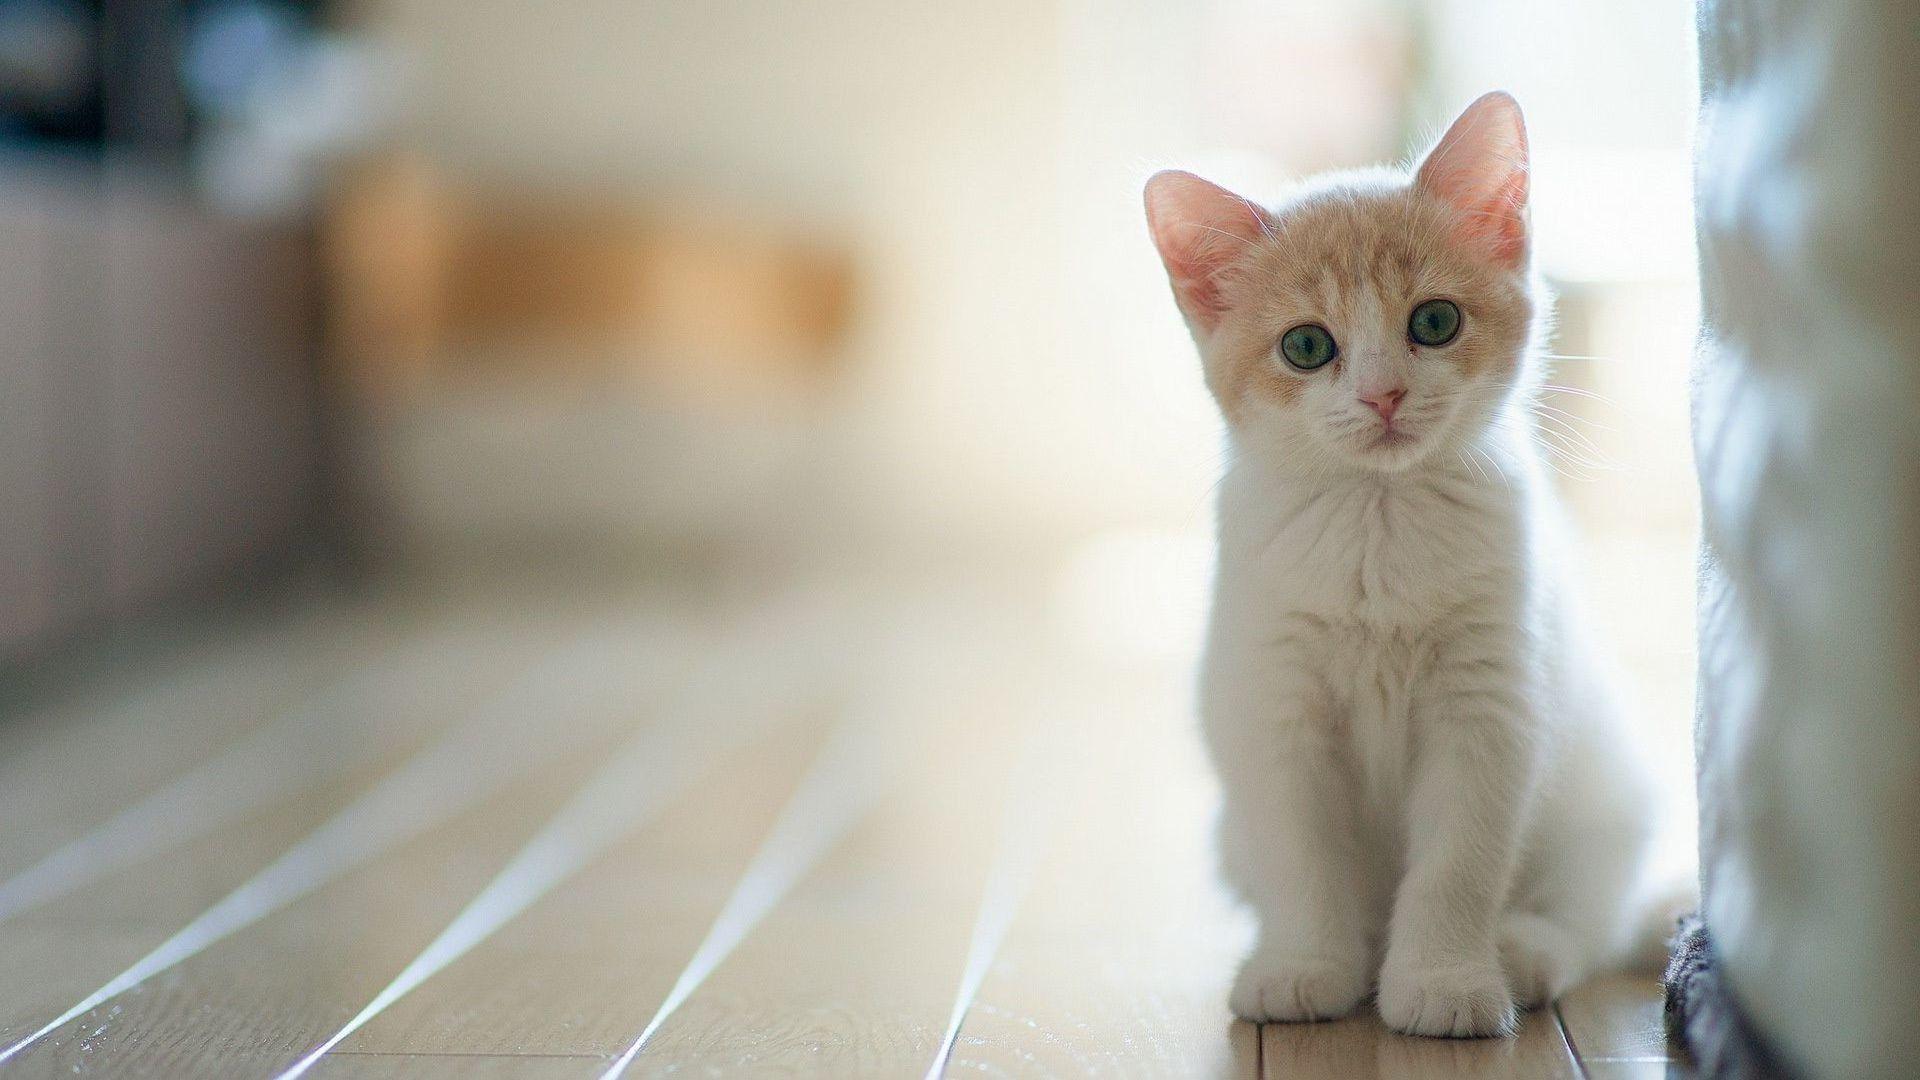 Cute Kittens For Desktop Wallpapers